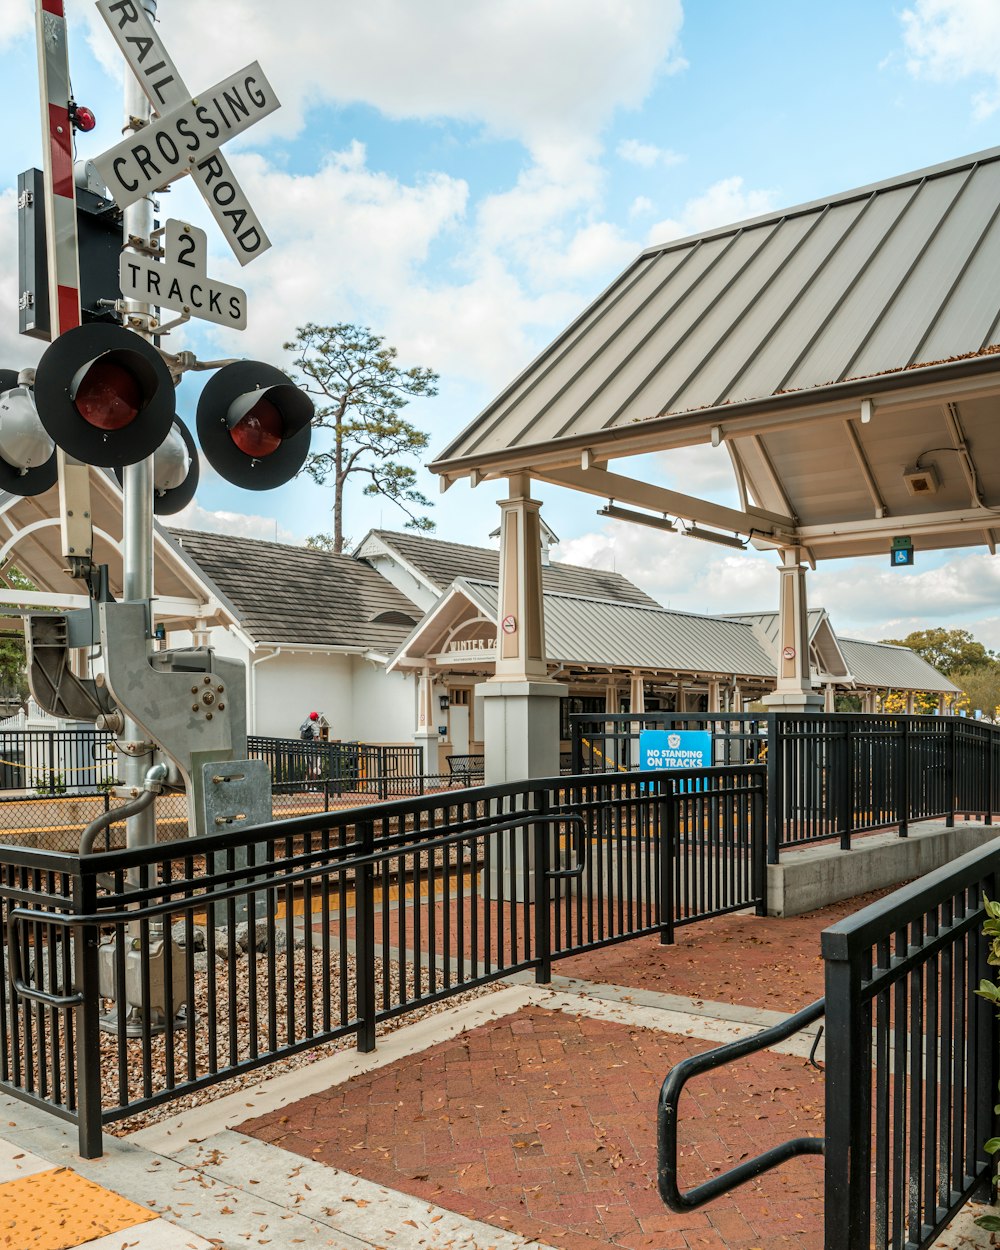 a railroad crossing signal at a train station